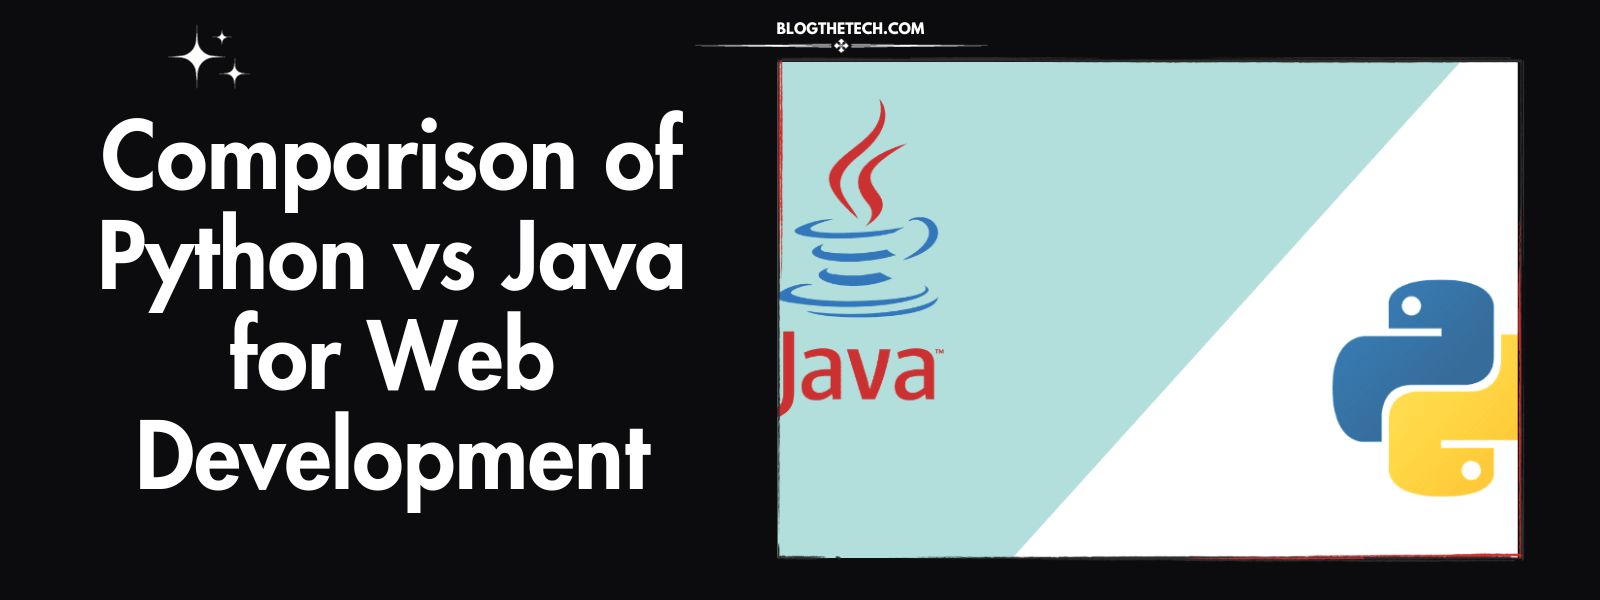 Comparison of Python vs Java for Web Development